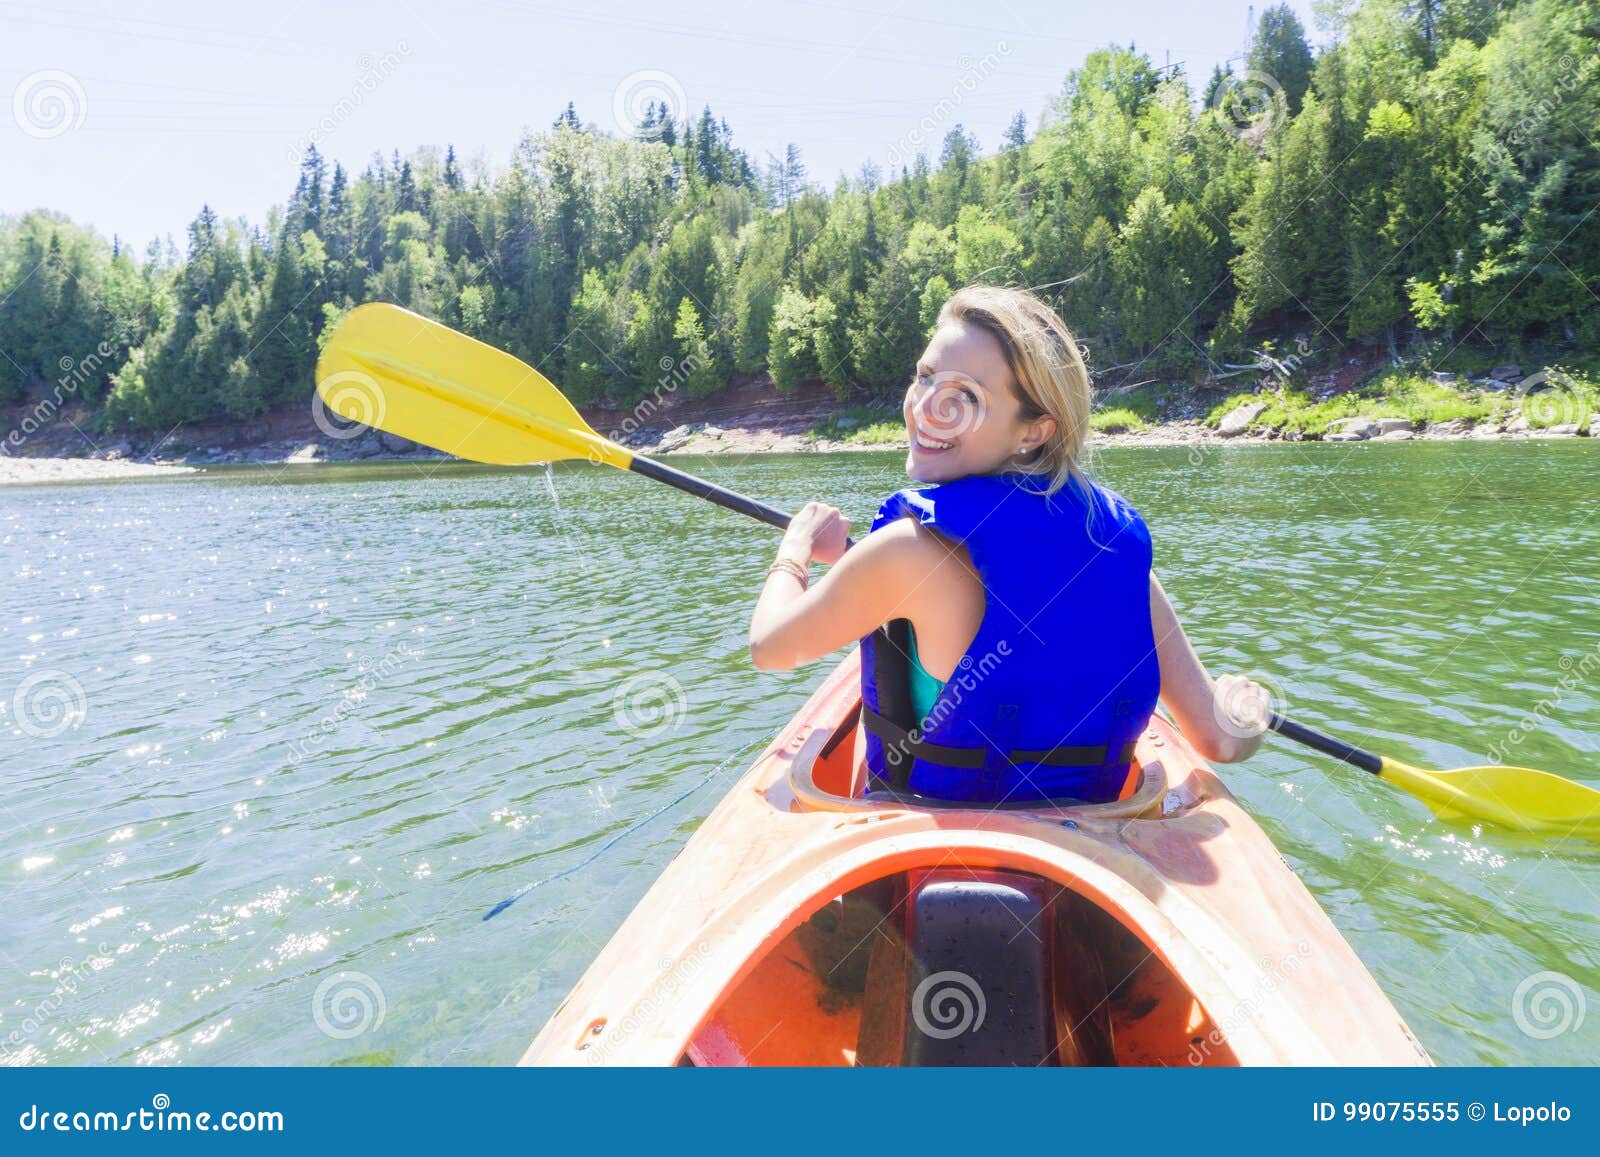 Young woman sea kayaking stock image. Image of person - 99075555